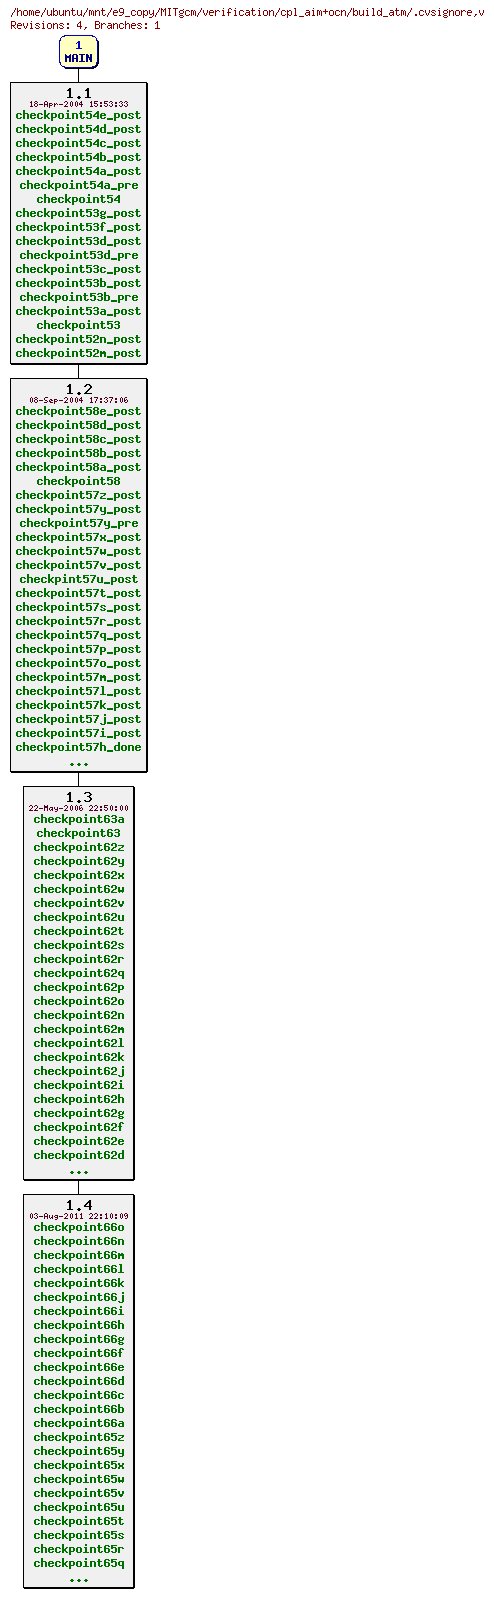 Revisions of MITgcm/verification/cpl_aim+ocn/build_atm/.cvsignore